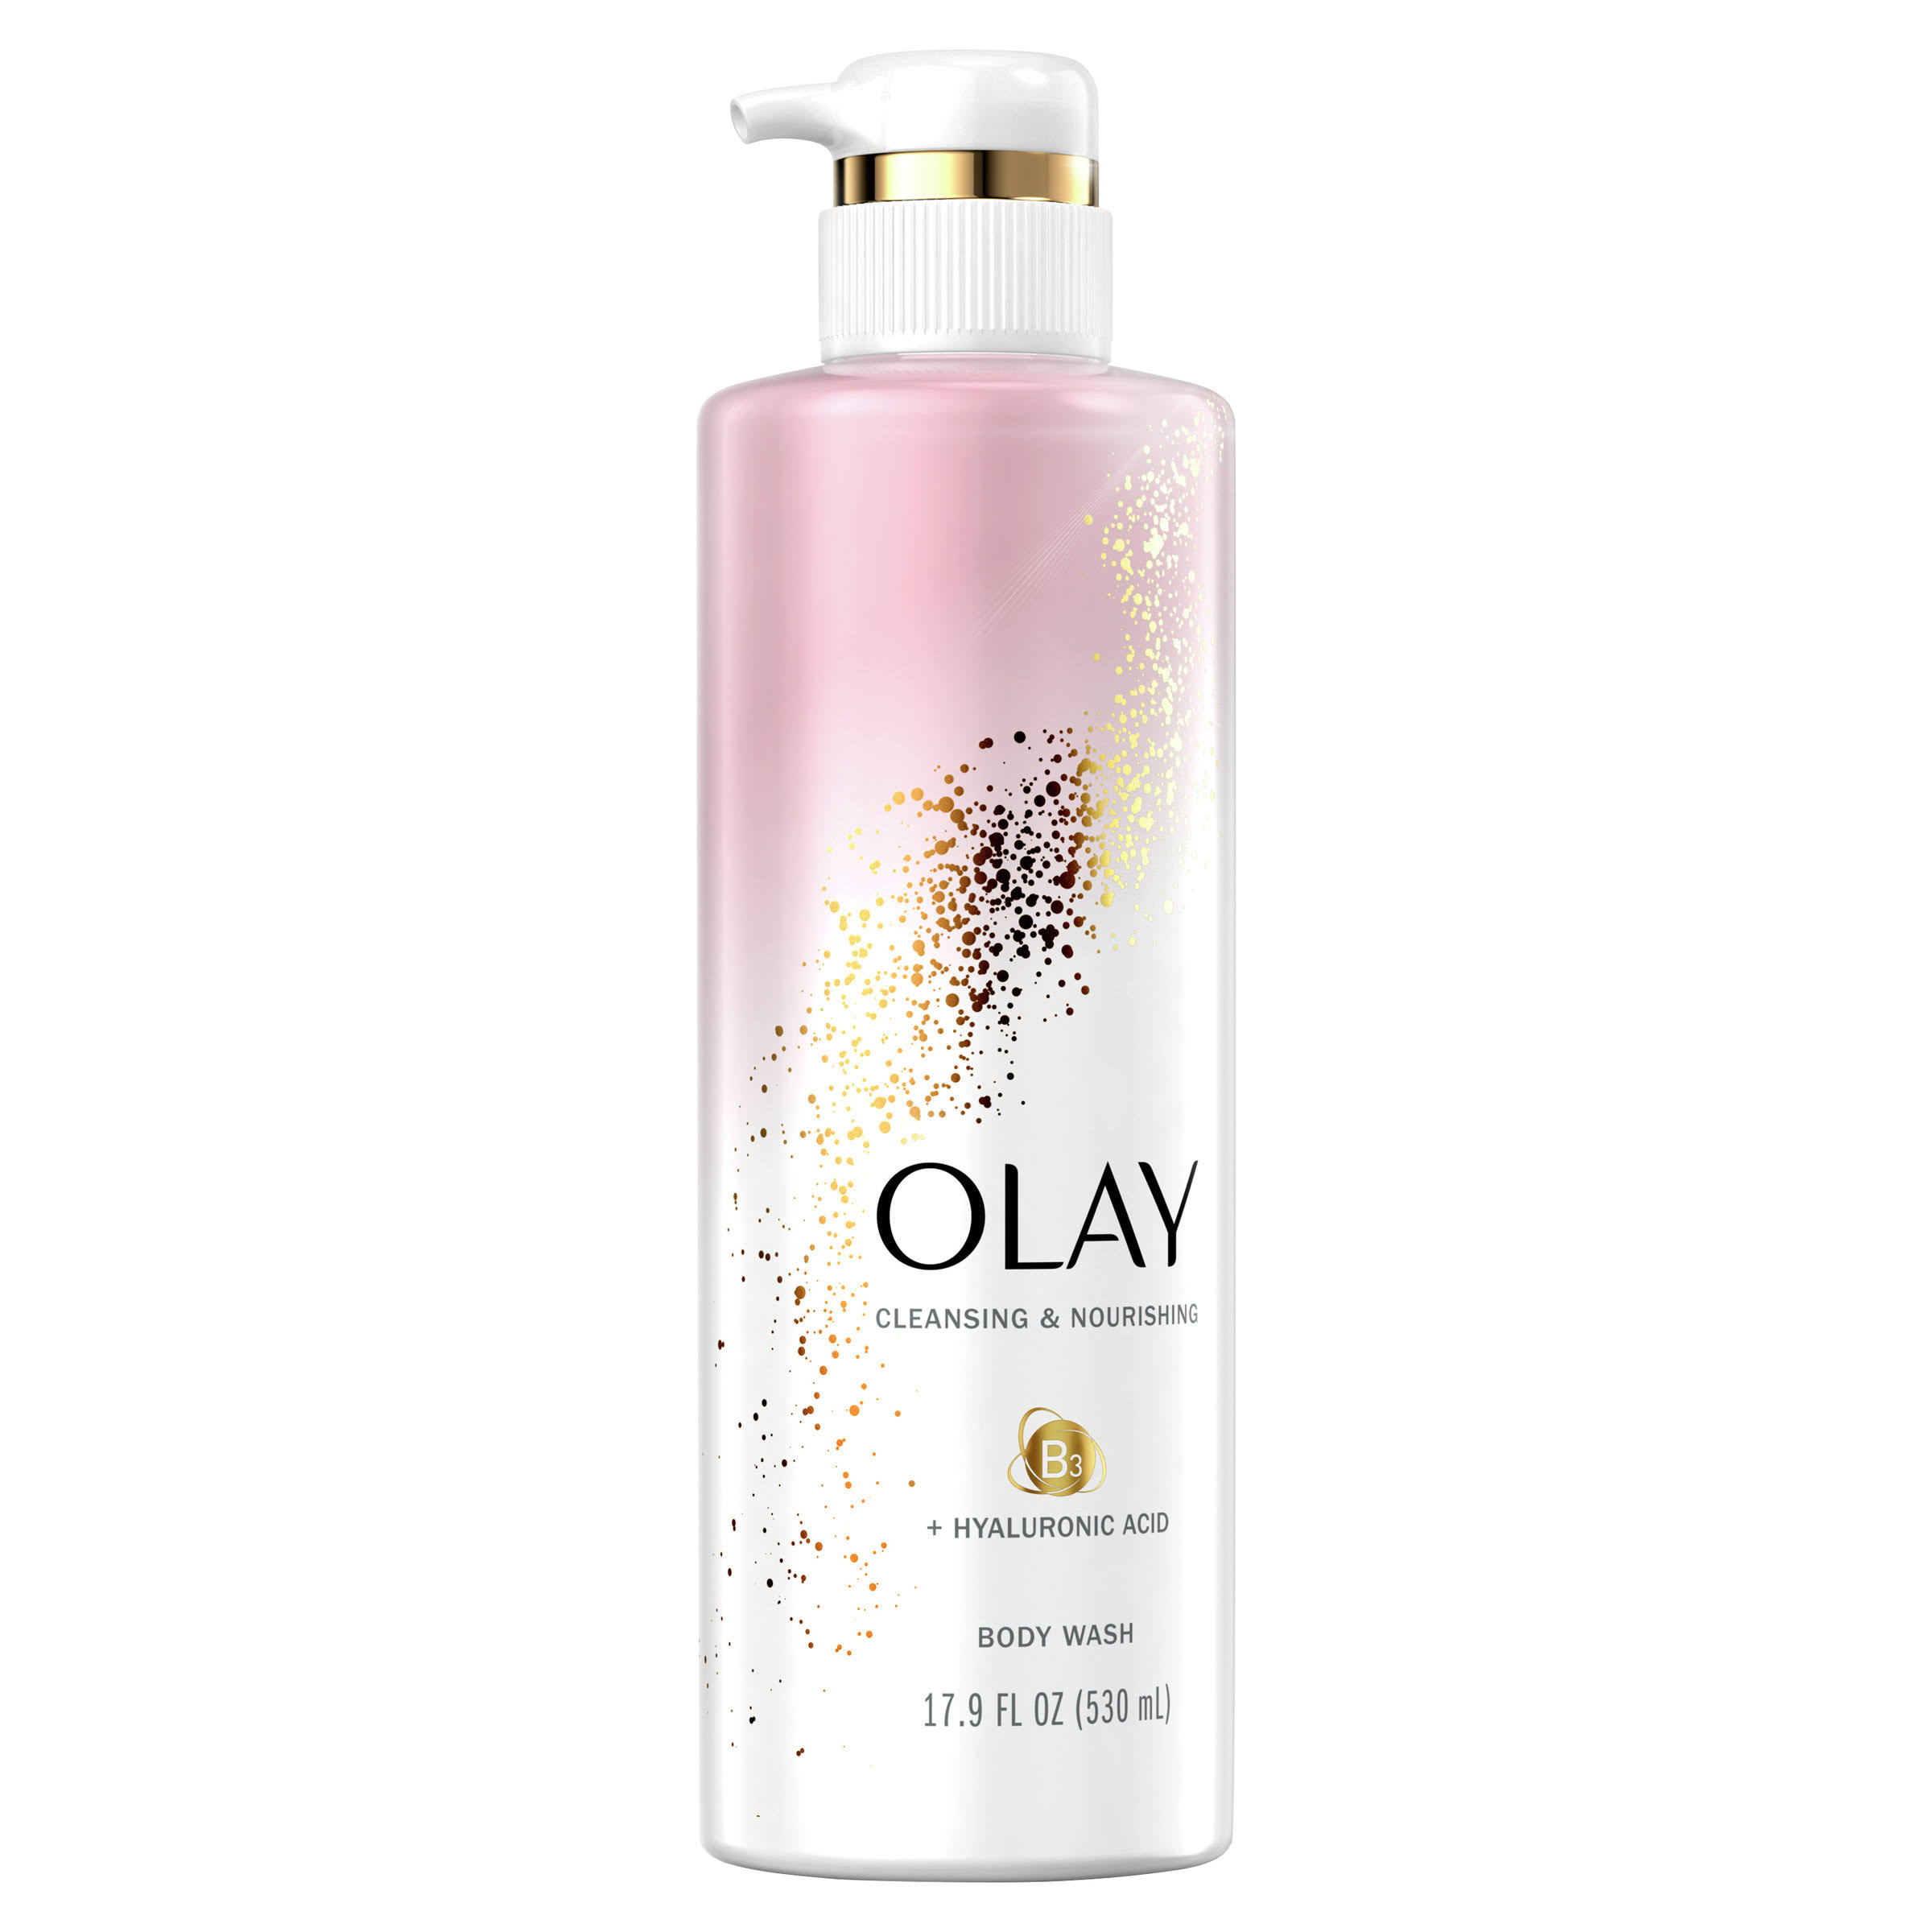 Olay Body Wash, Cleansing & Nourishing - 17.9 fl oz